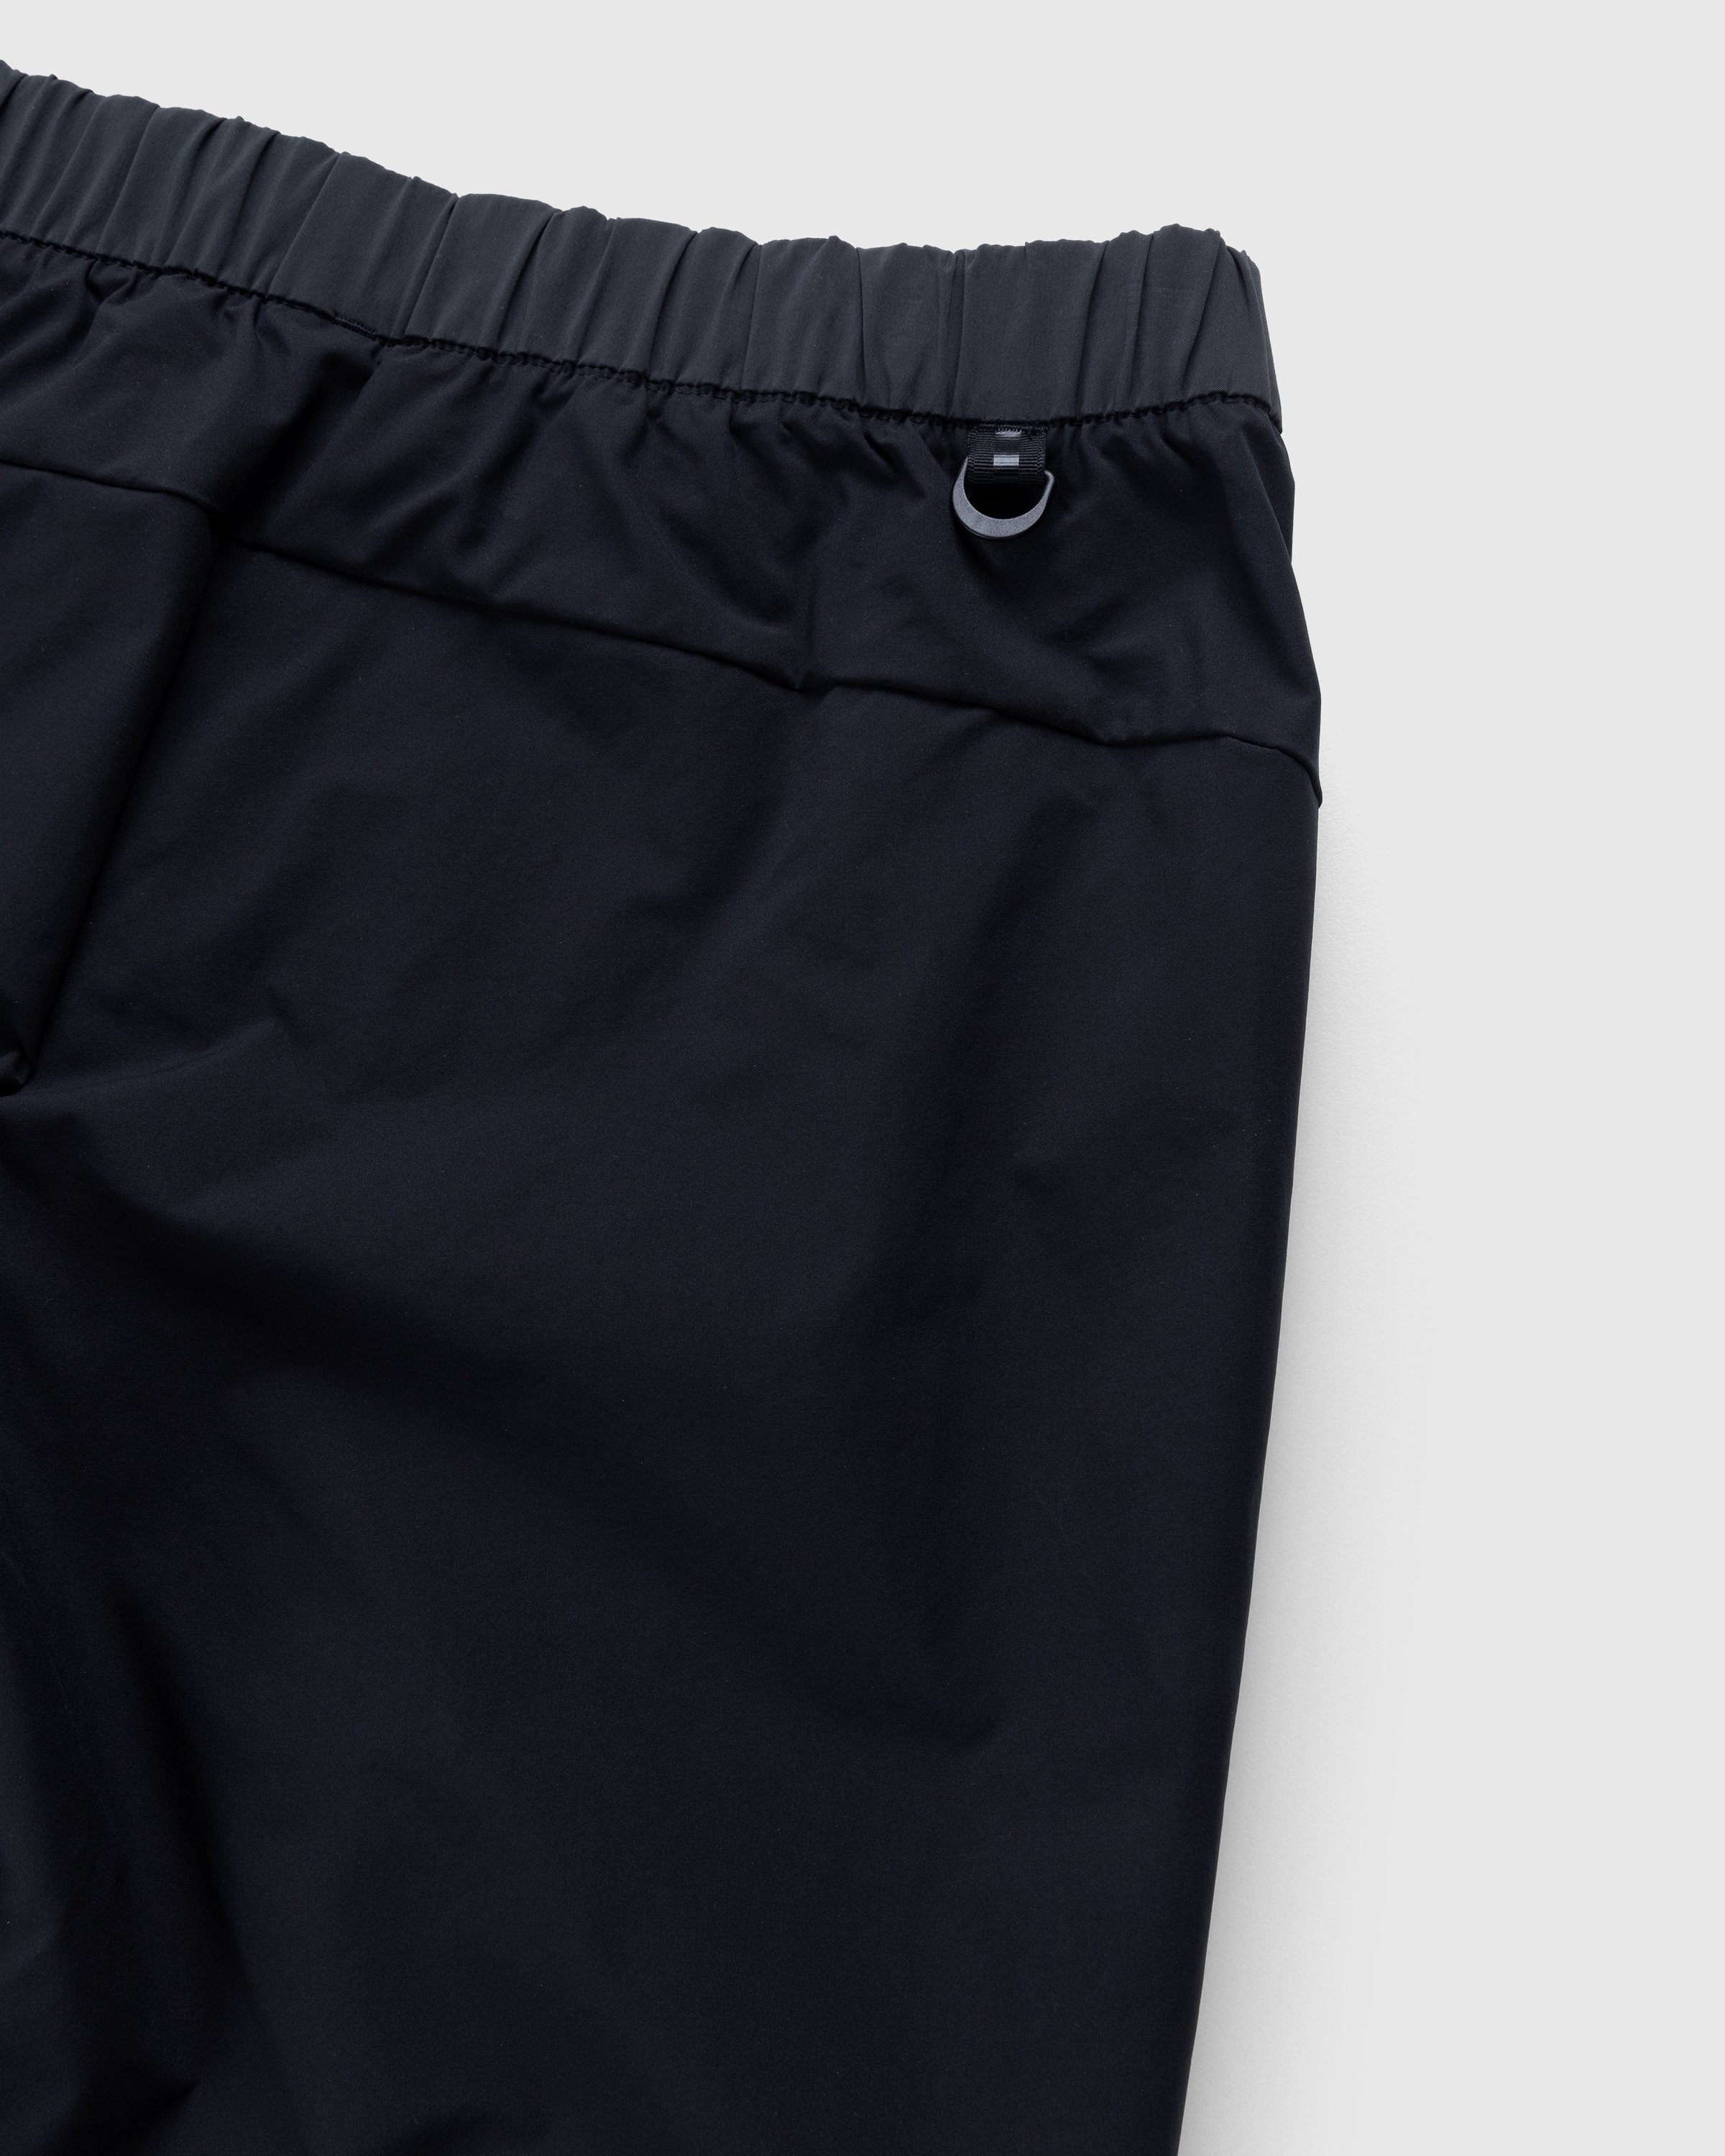 Adidas - Voyager Pants Black/Carbon - Clothing - Black - Image 7